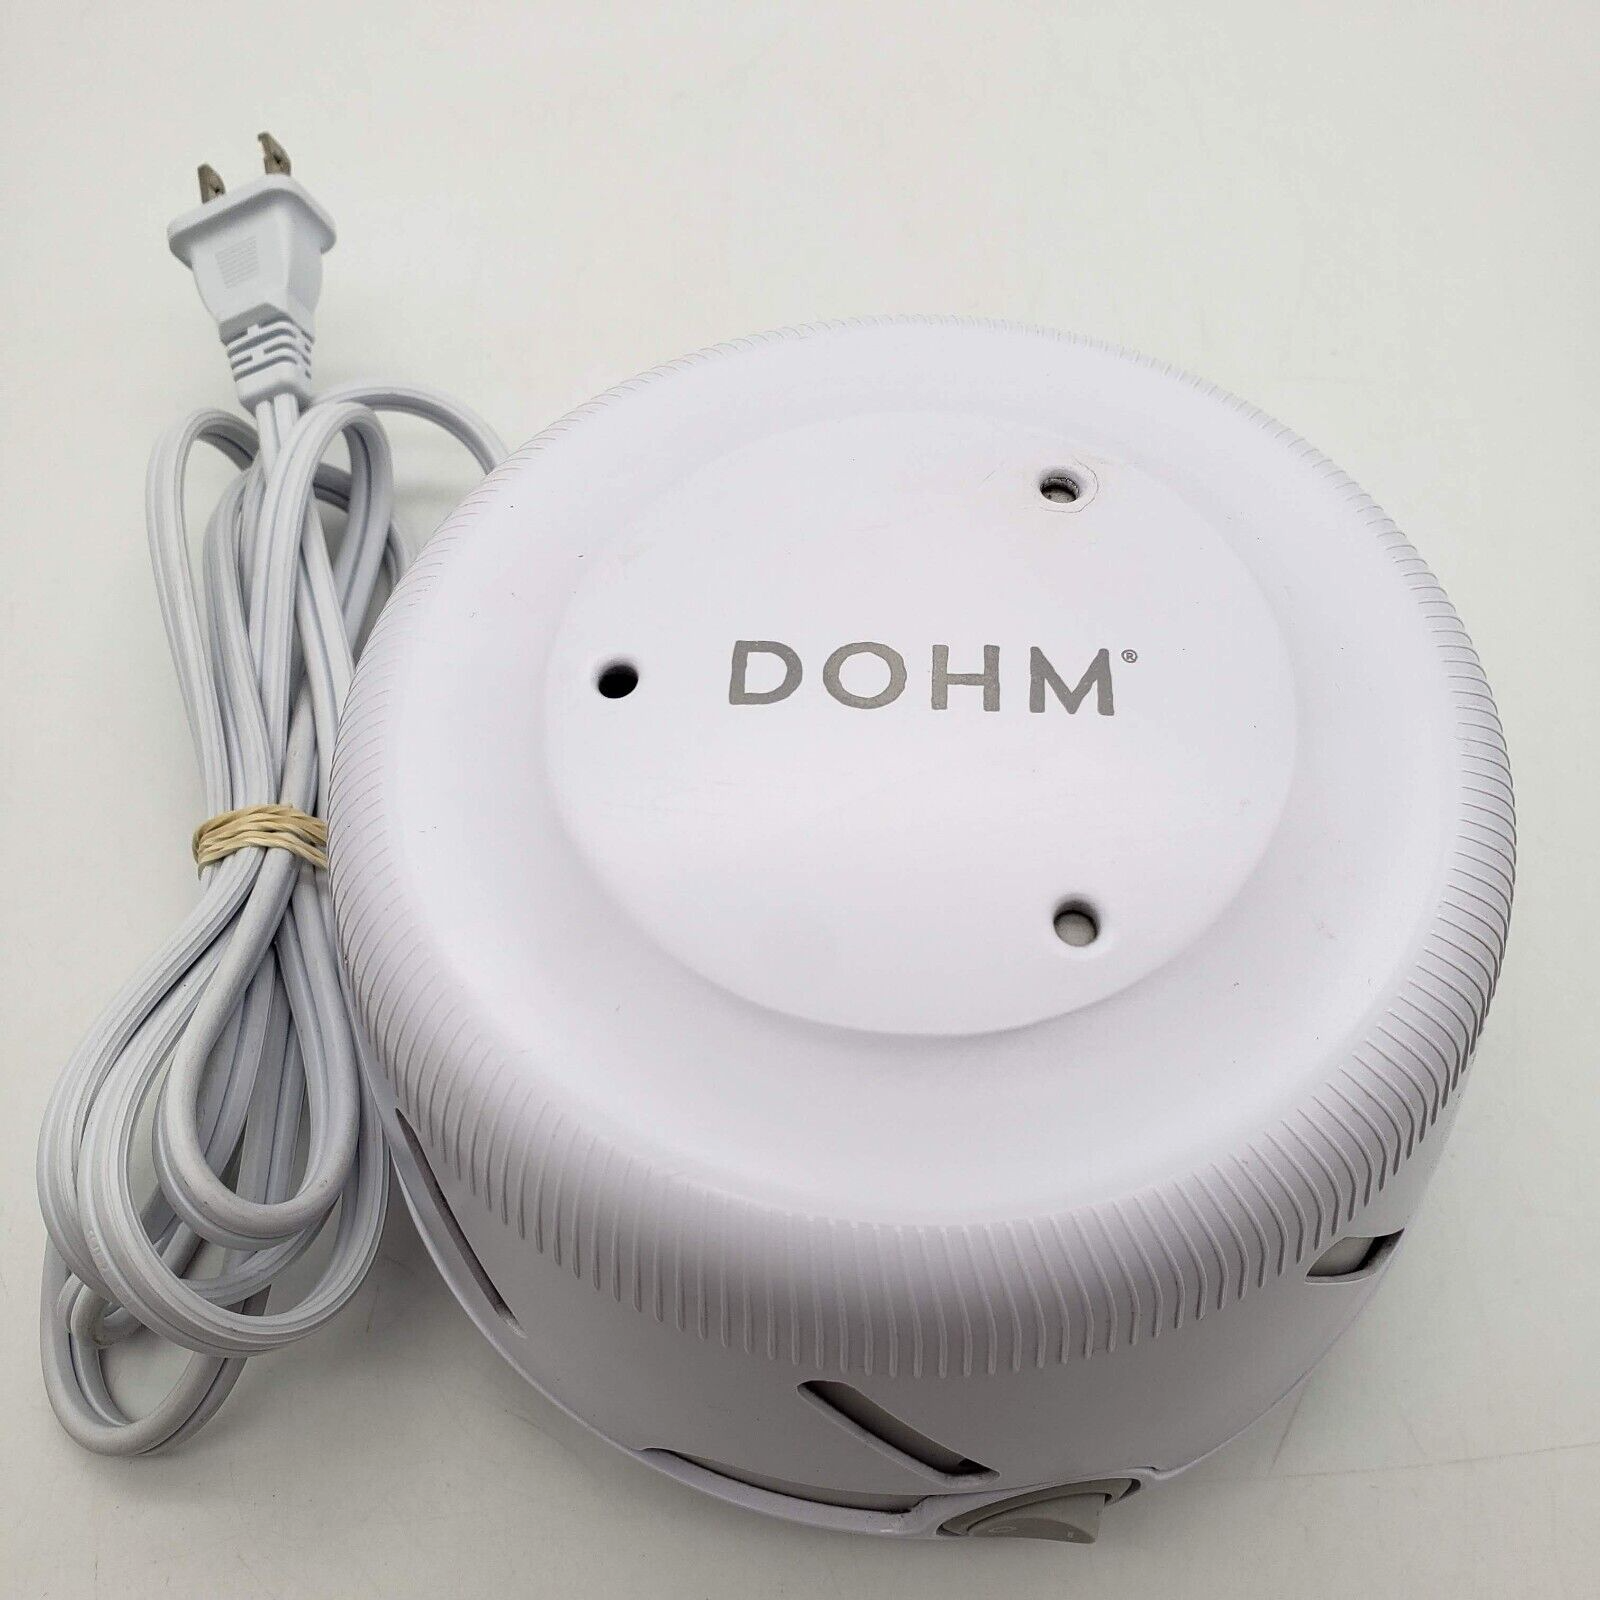 Dohm Uno White Noise Sleep Sound Machine, White Marpac Yogasleep UM1USCW - $24.70